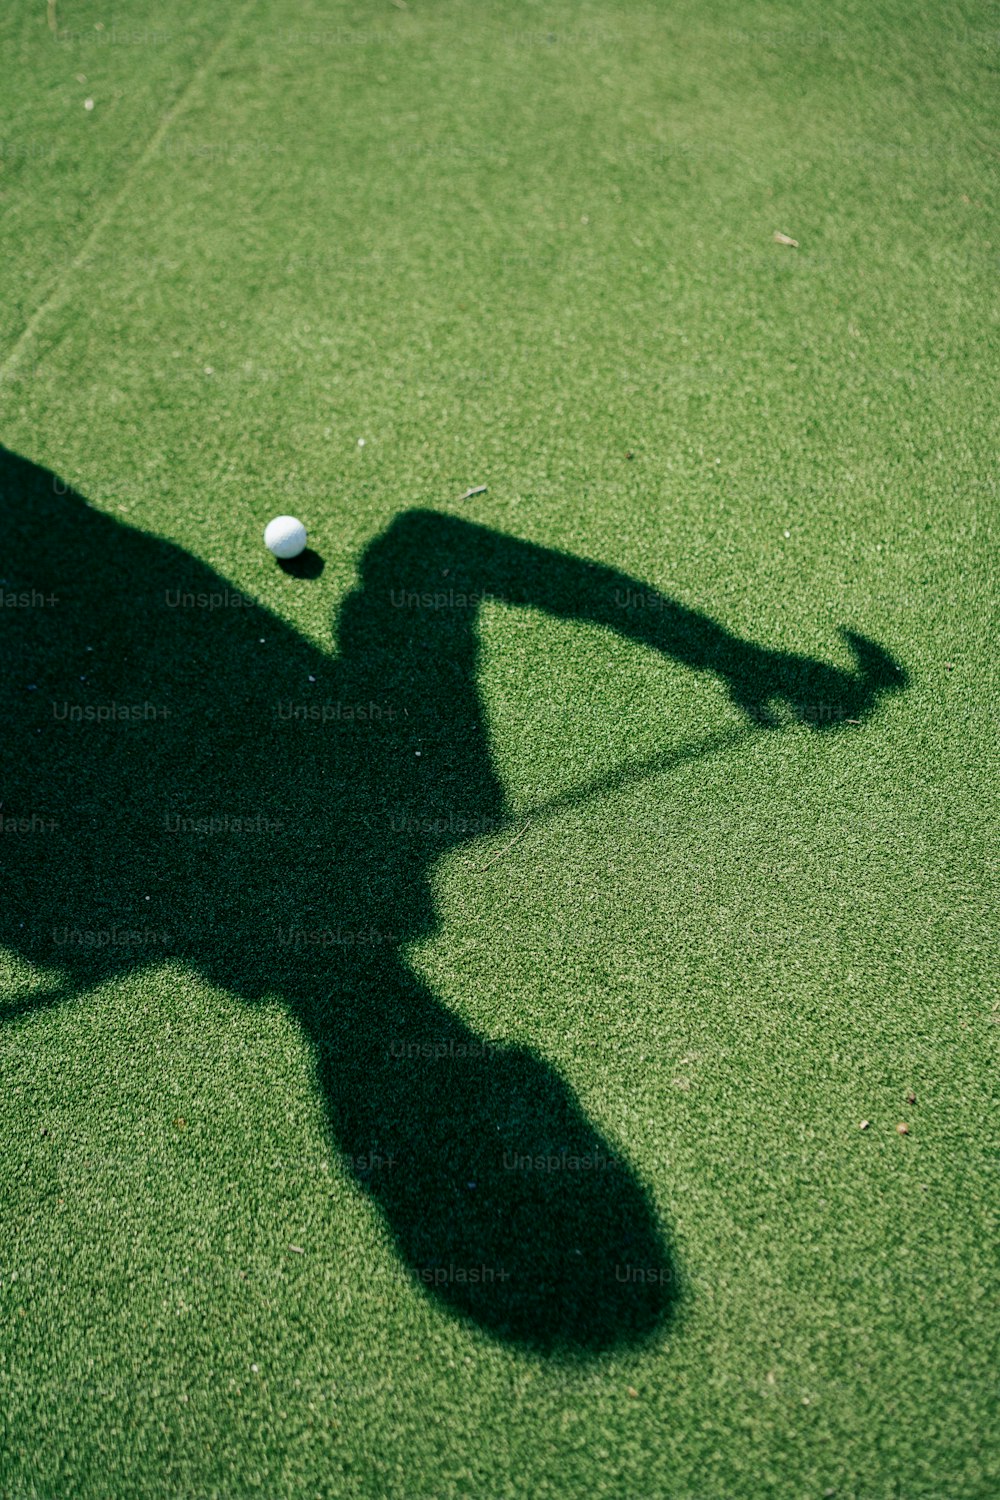 una sombra de una persona golpeando una pelota de tenis